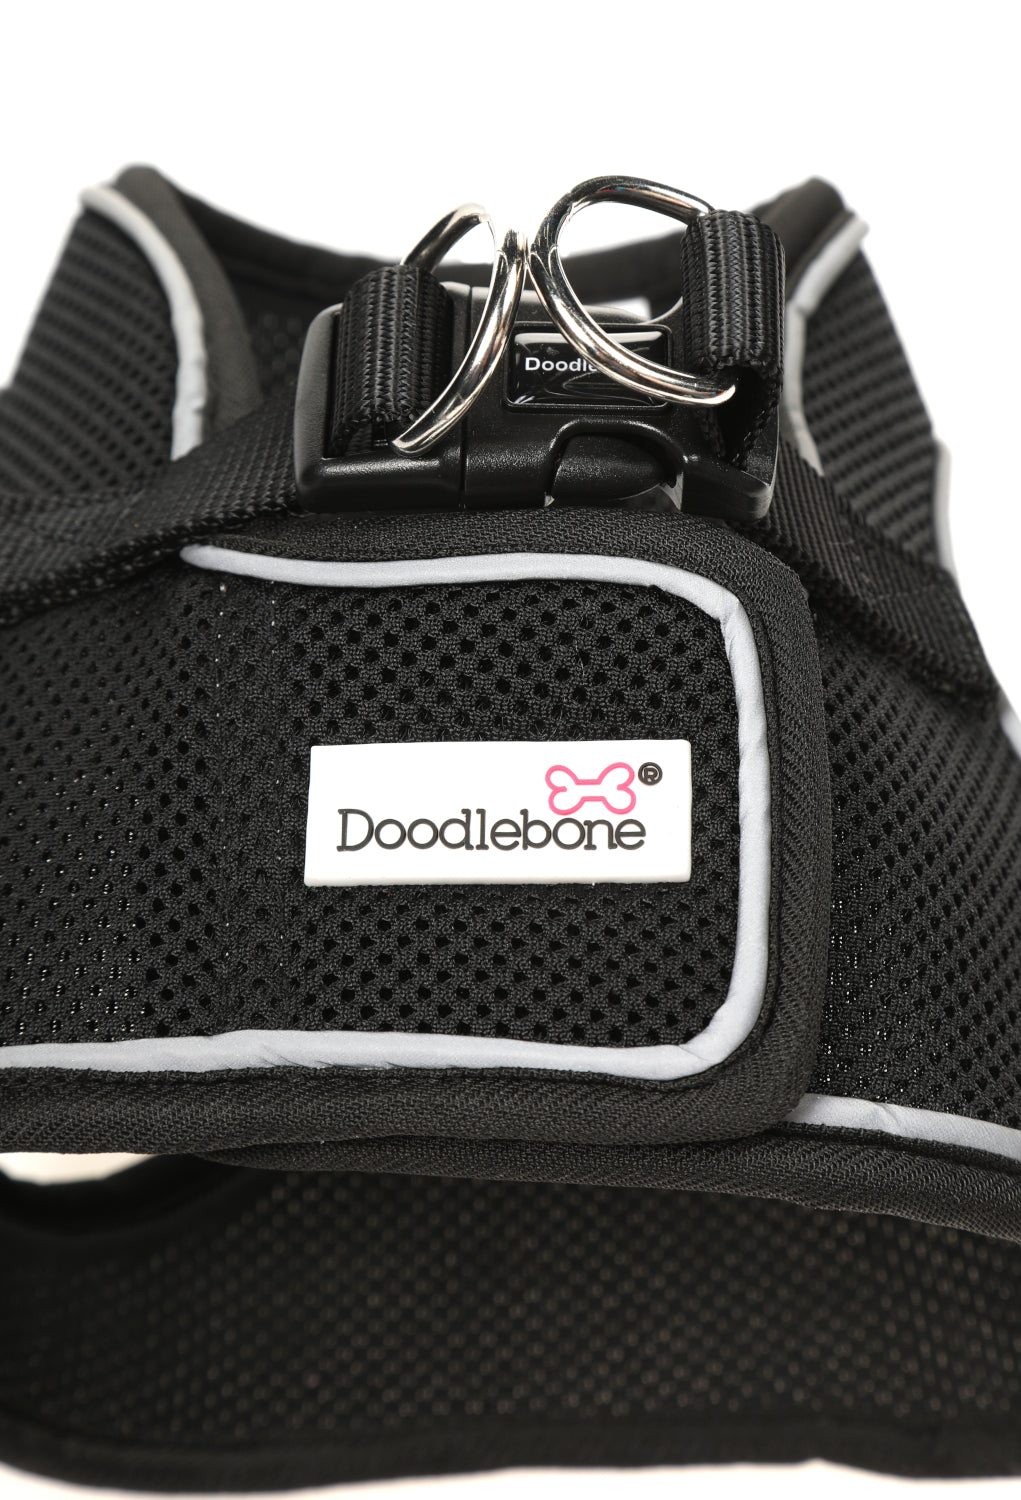 Doodlebone Originals Snappy Dog Harness Coal 7 Sizes